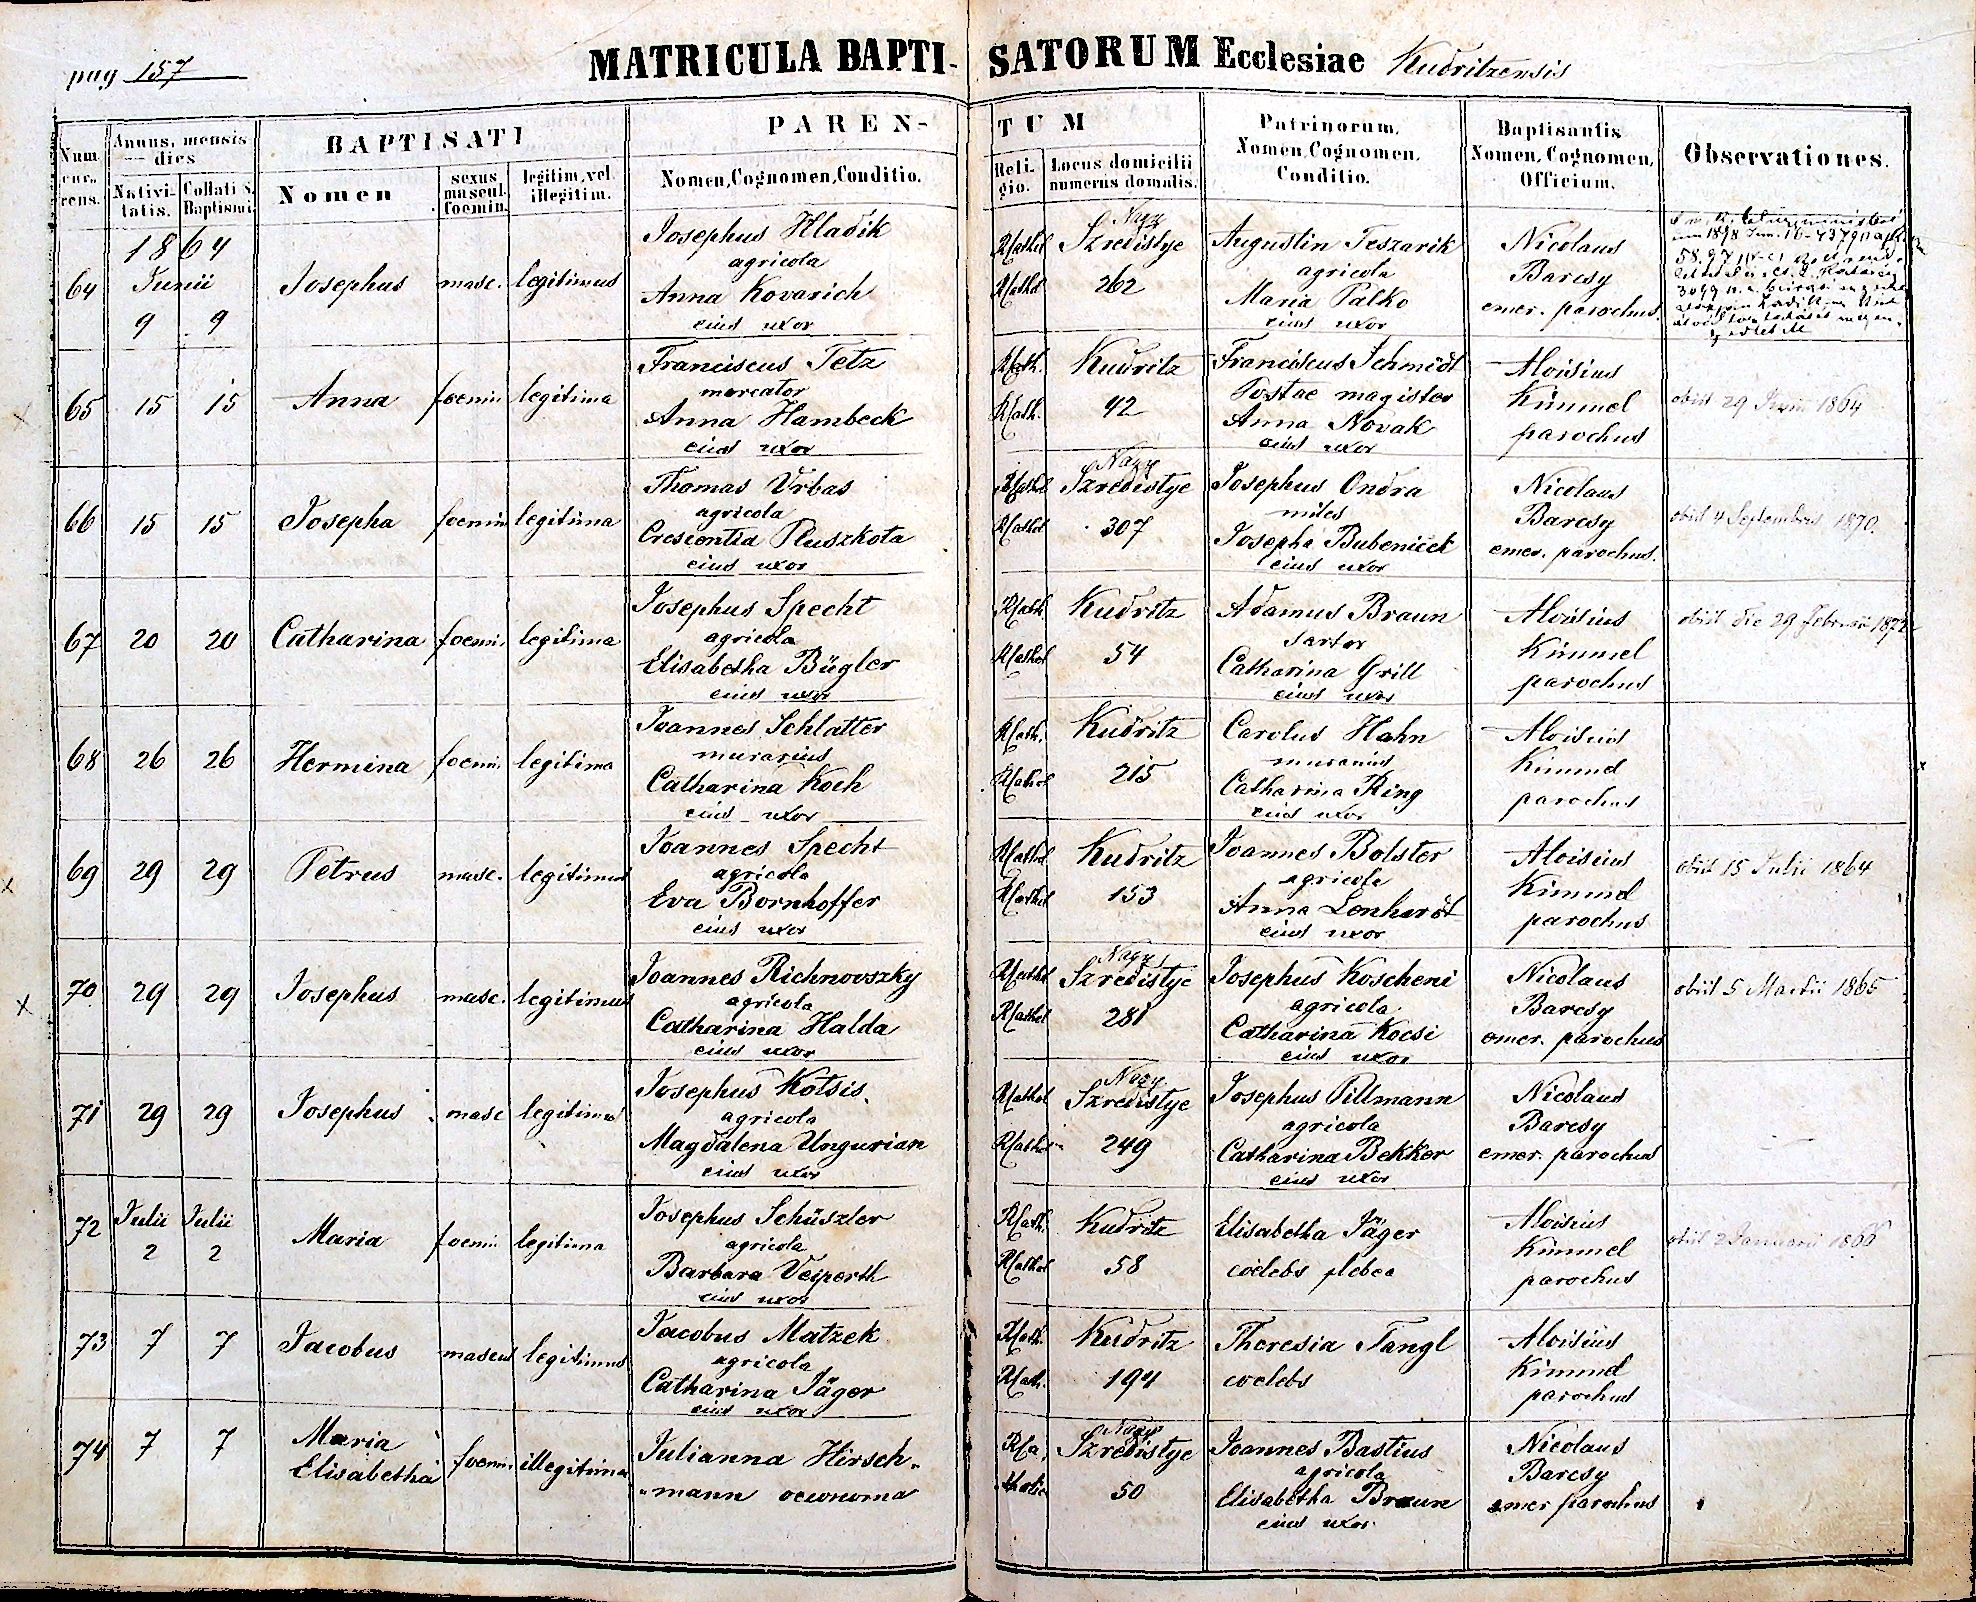 images/church_records/BIRTHS/1852-1870B/157